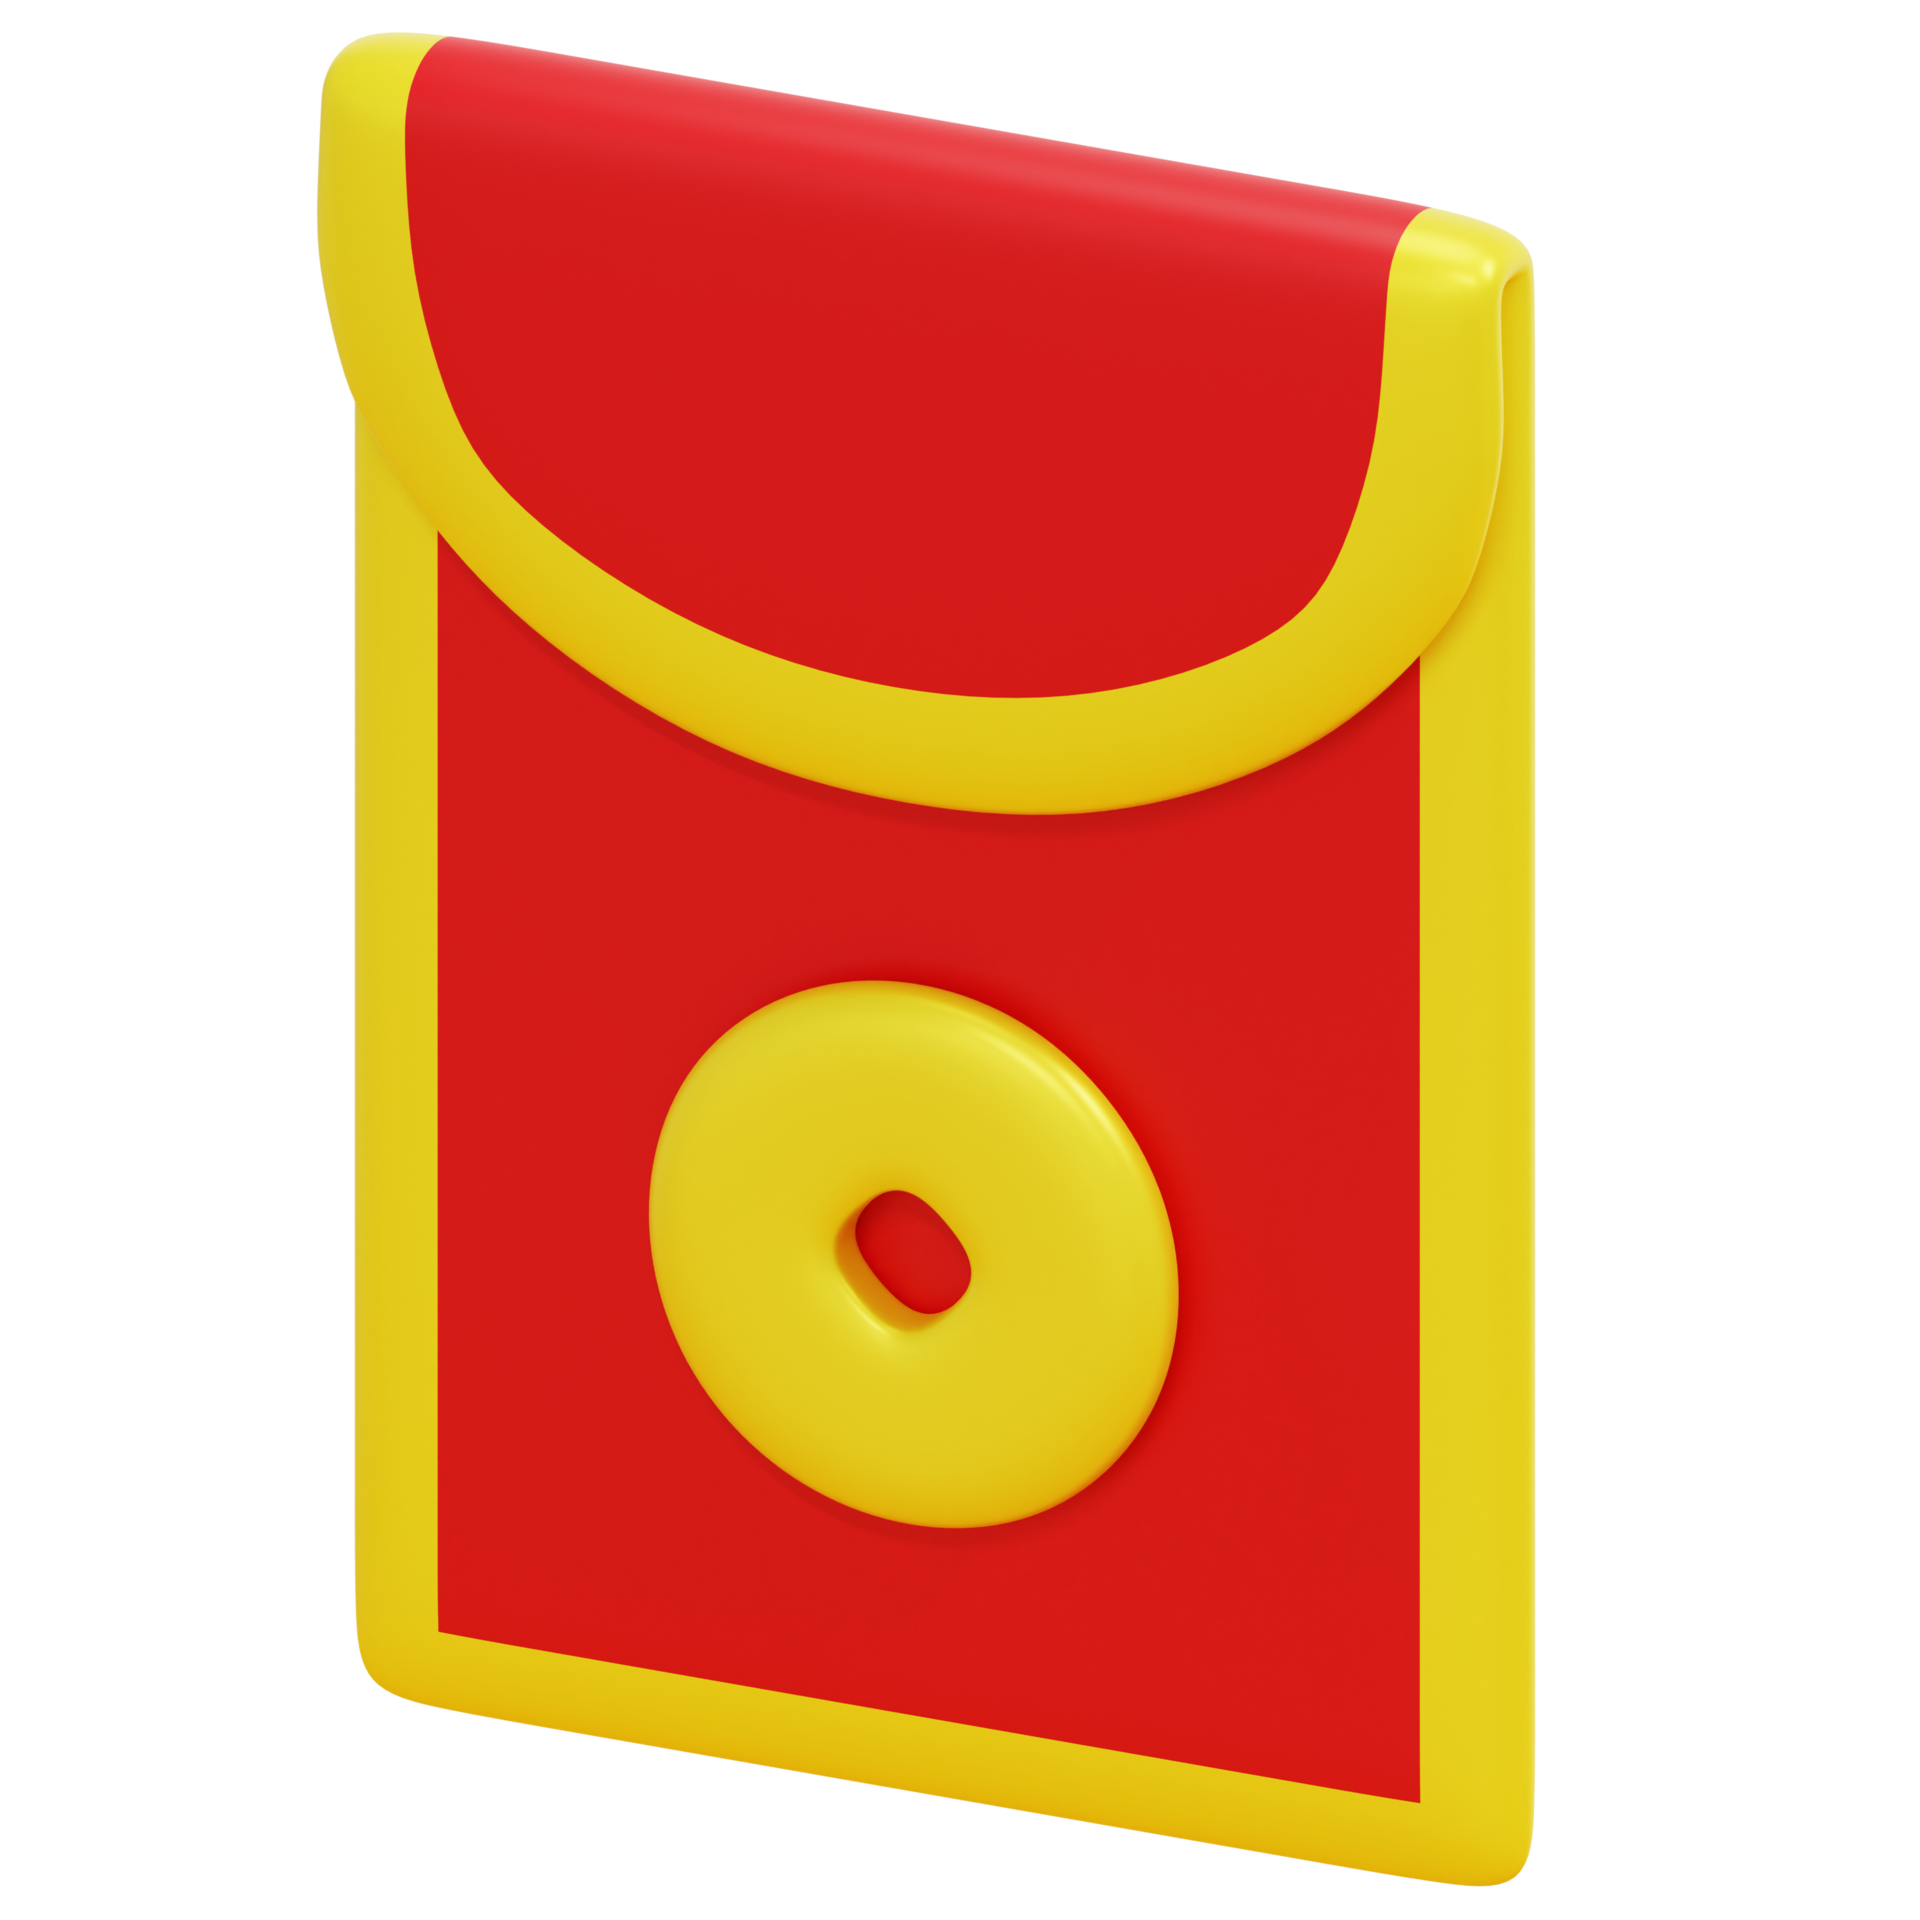 Red Envelope emoji icon in PNG, SVG